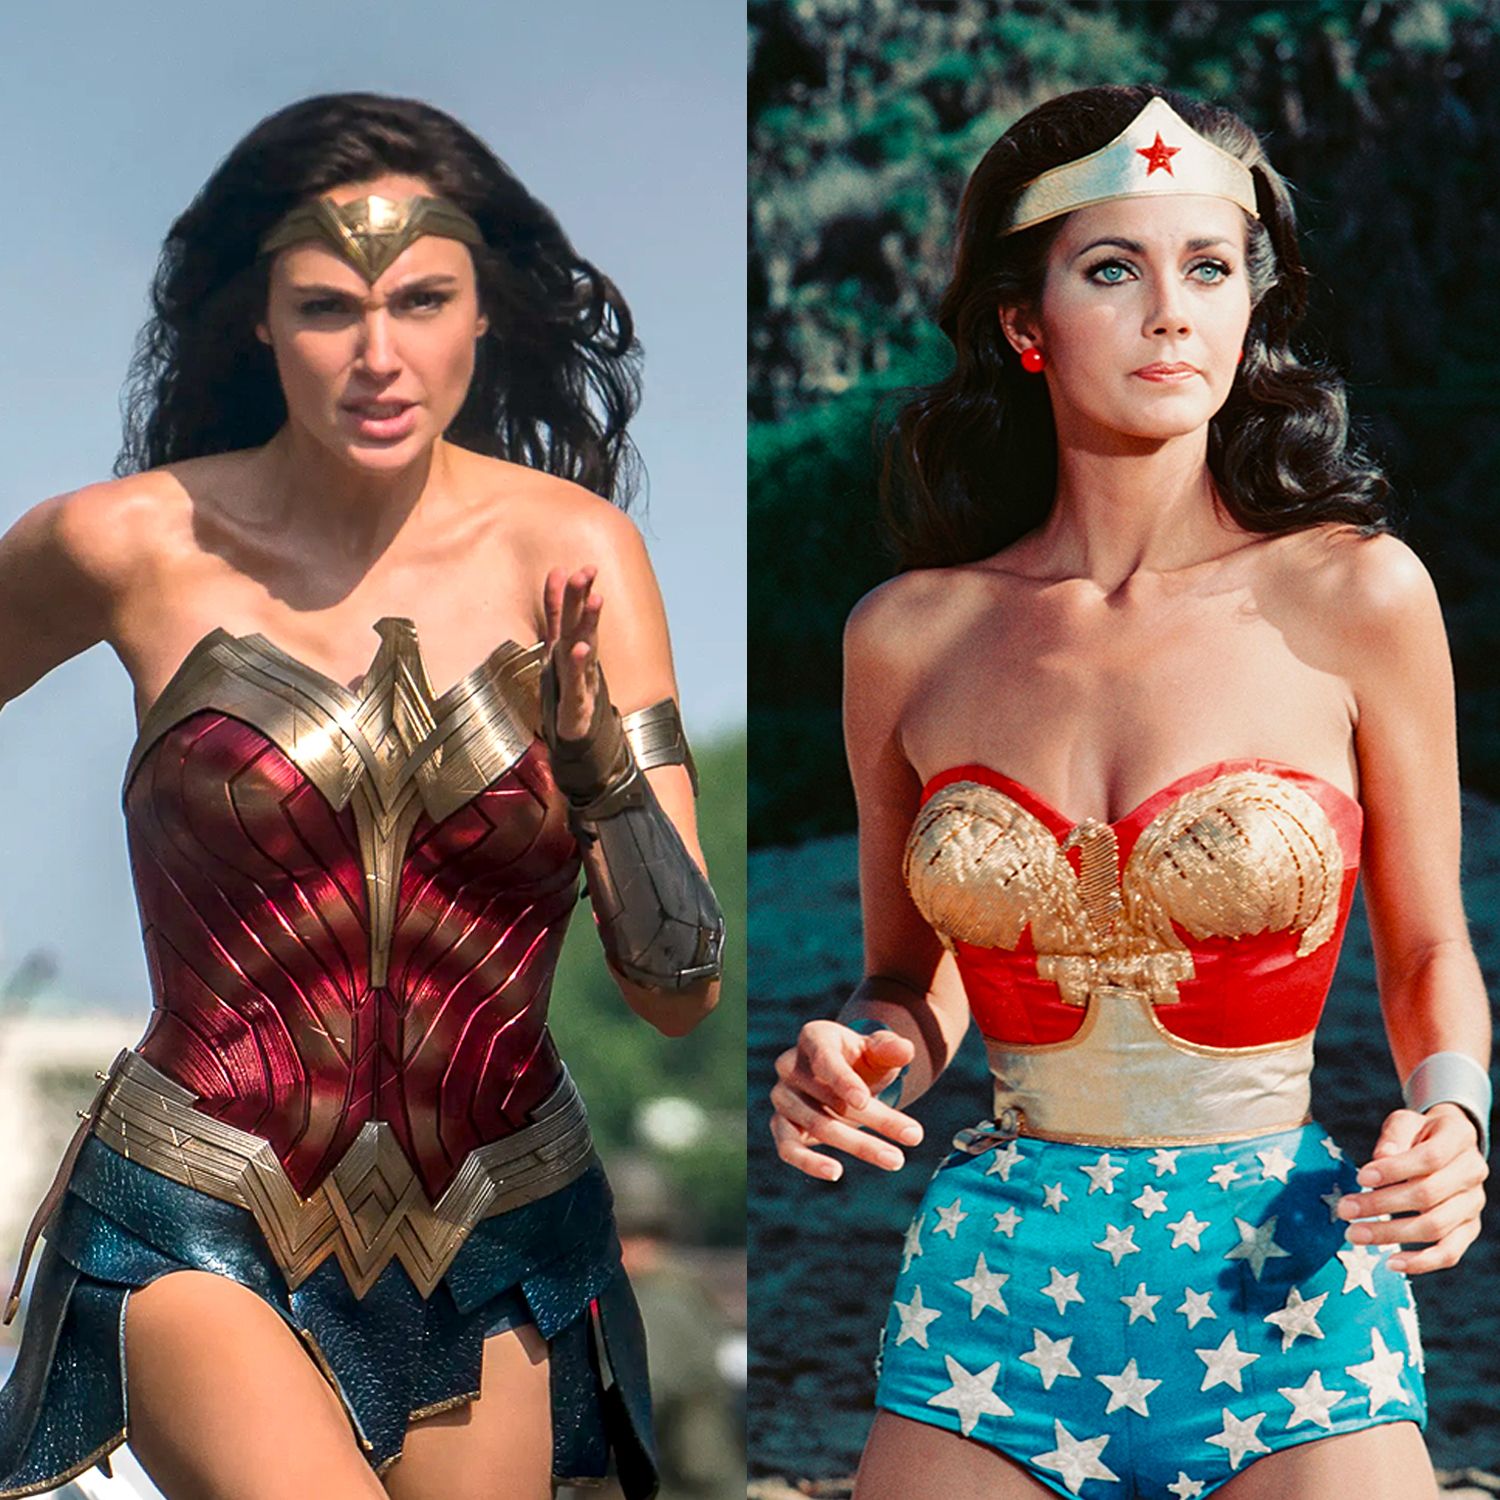 Wonder Woman 1984 cast, Full character profiles